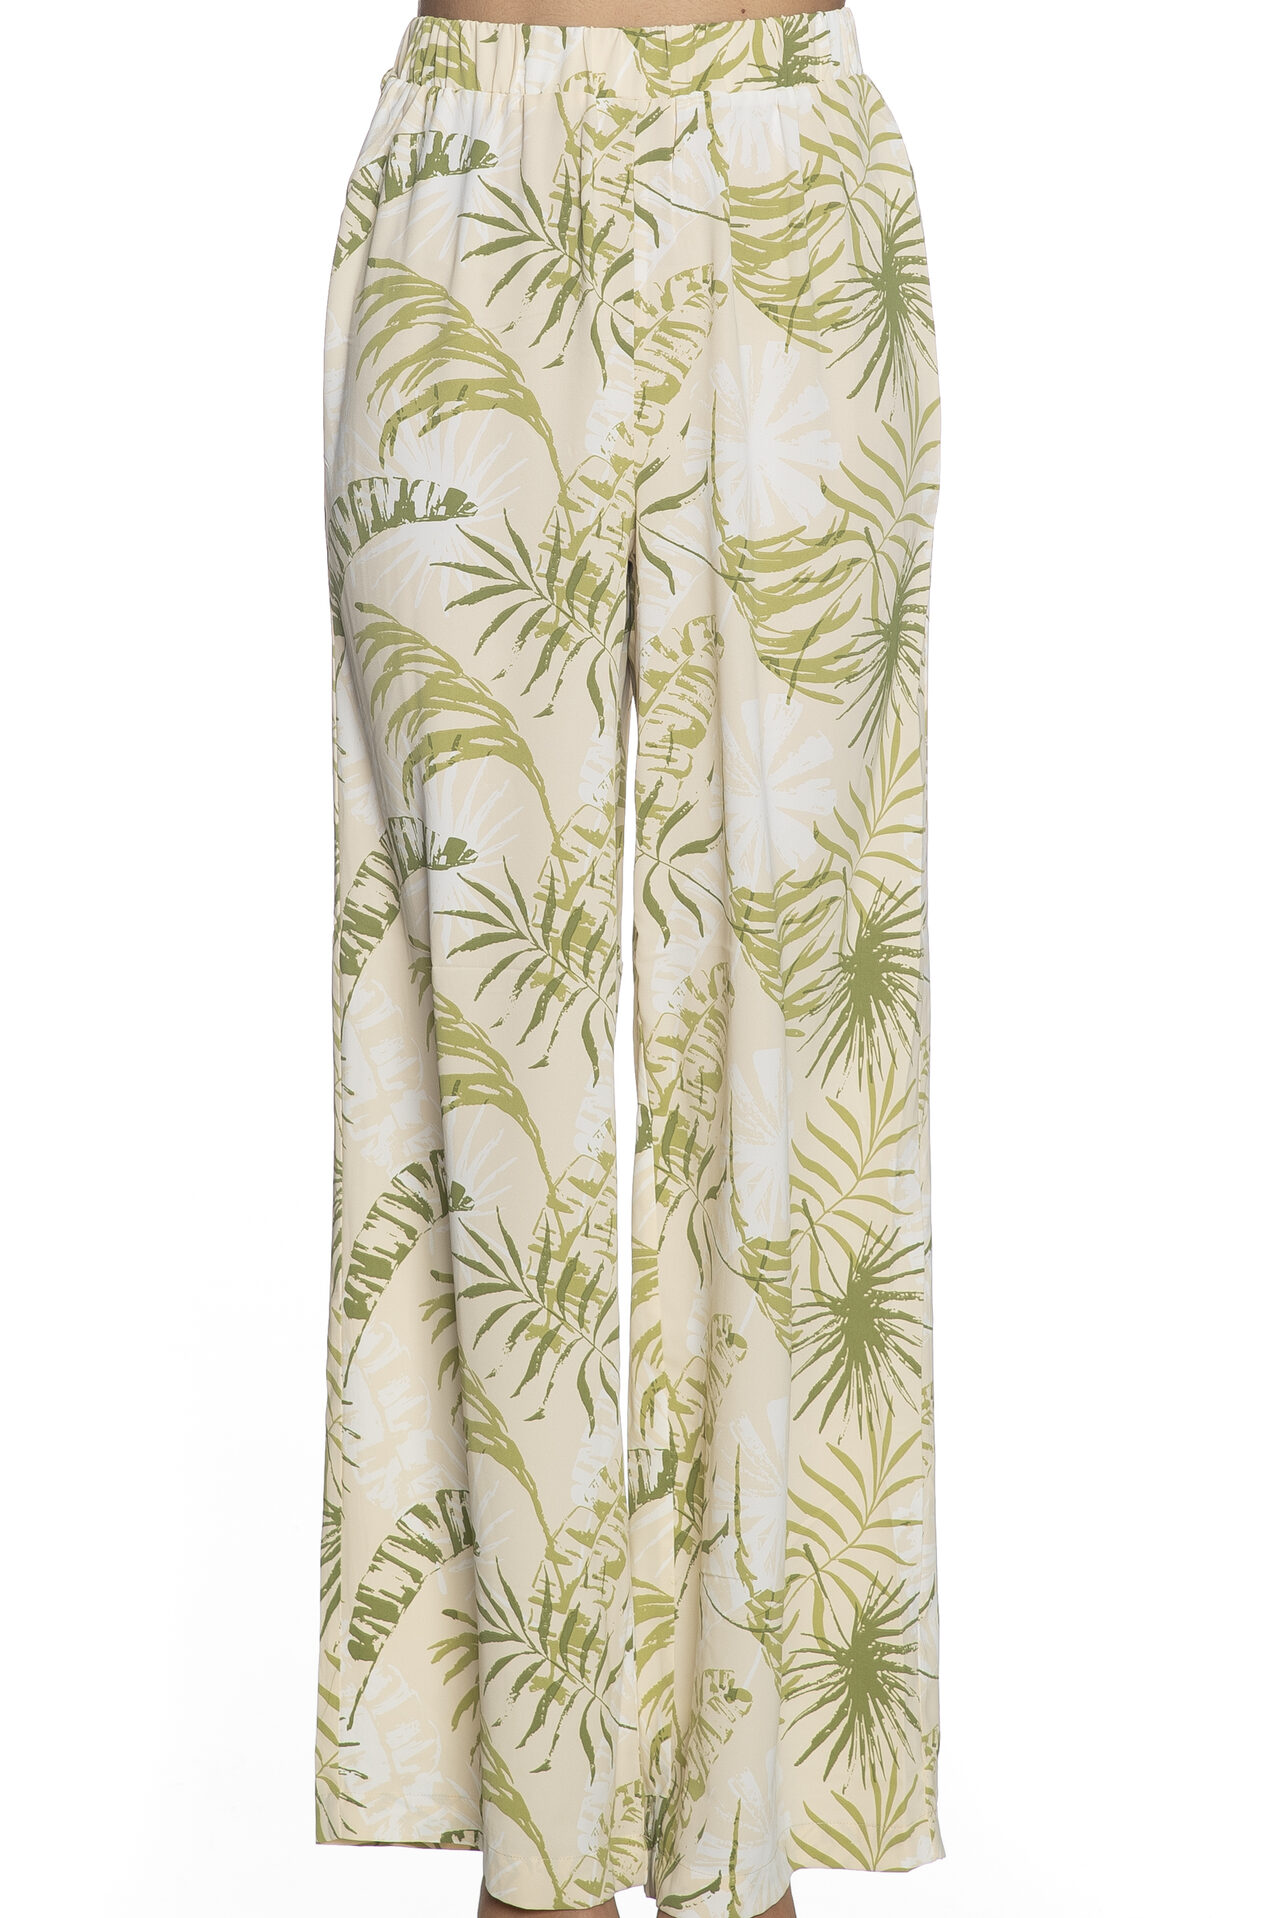 Pantalone Tiffosi Nilo da donna stampa botanica crema verde